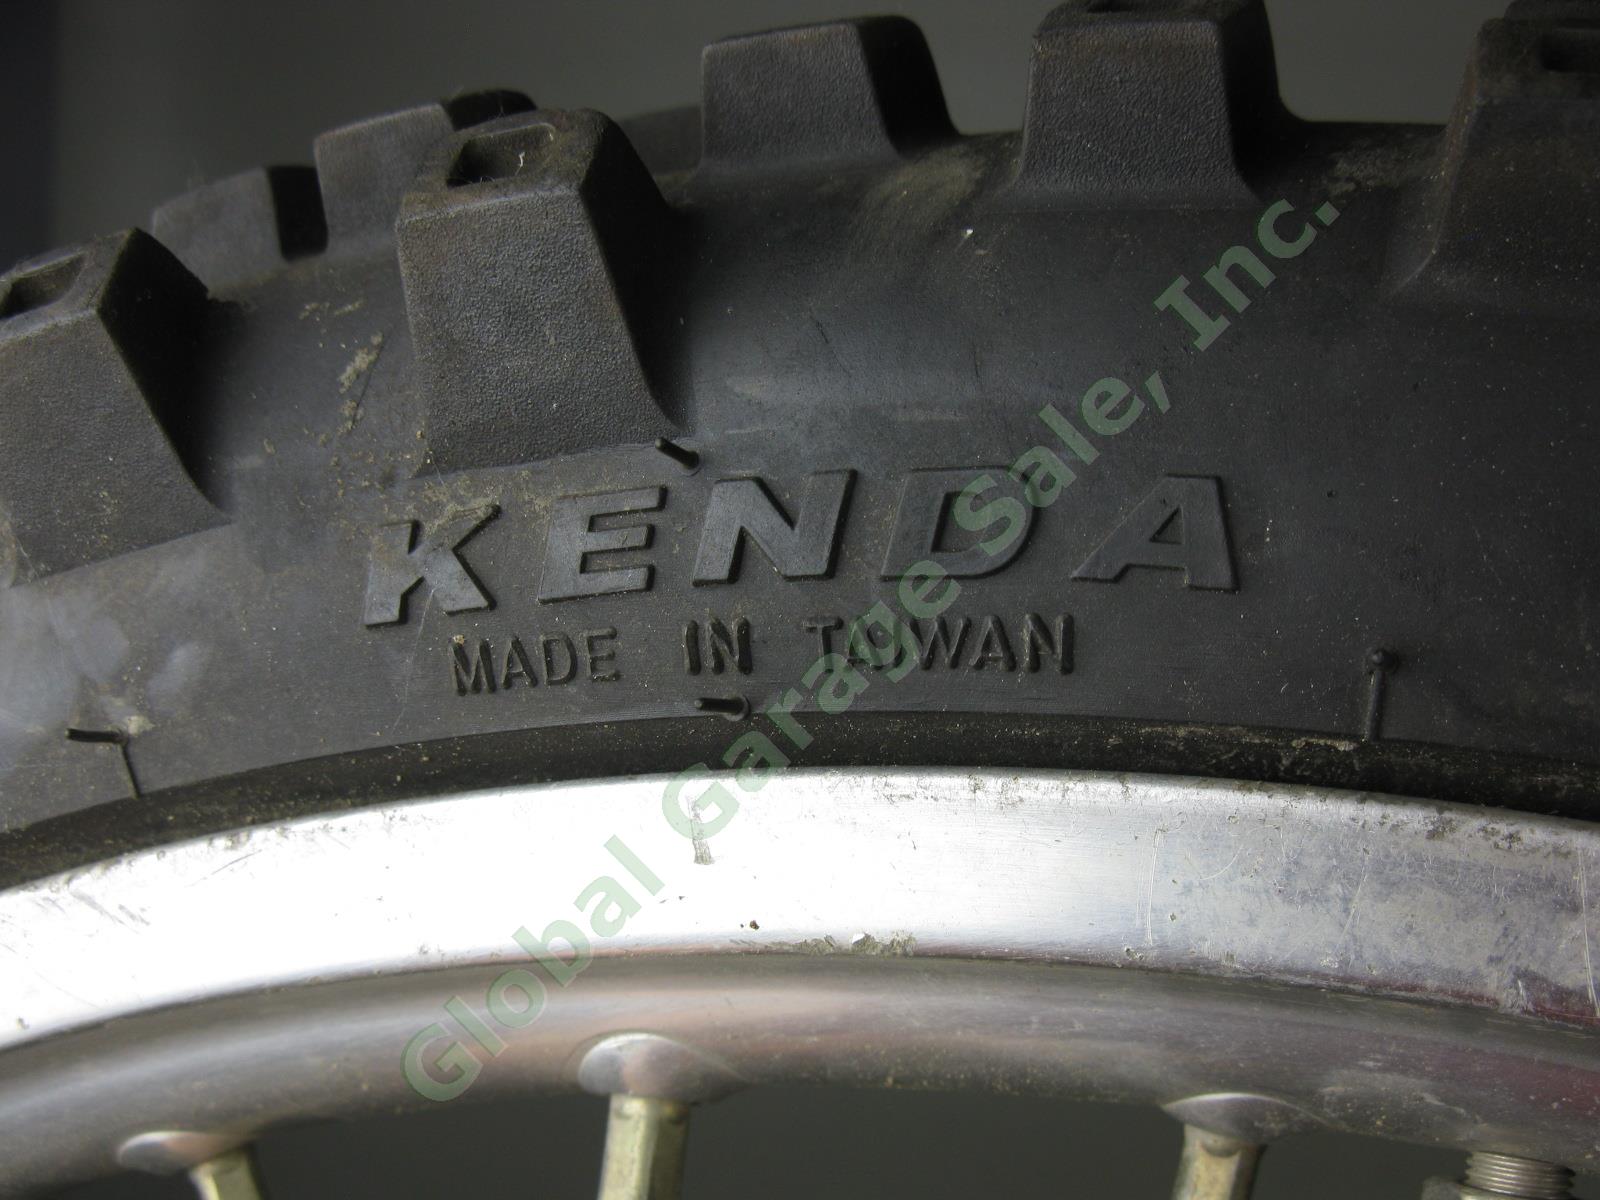 Talon Excel Takasago YZ85 Big Wheel J 19x1.40 Front Rim Kenda 70/100-19 M/C Tire 5